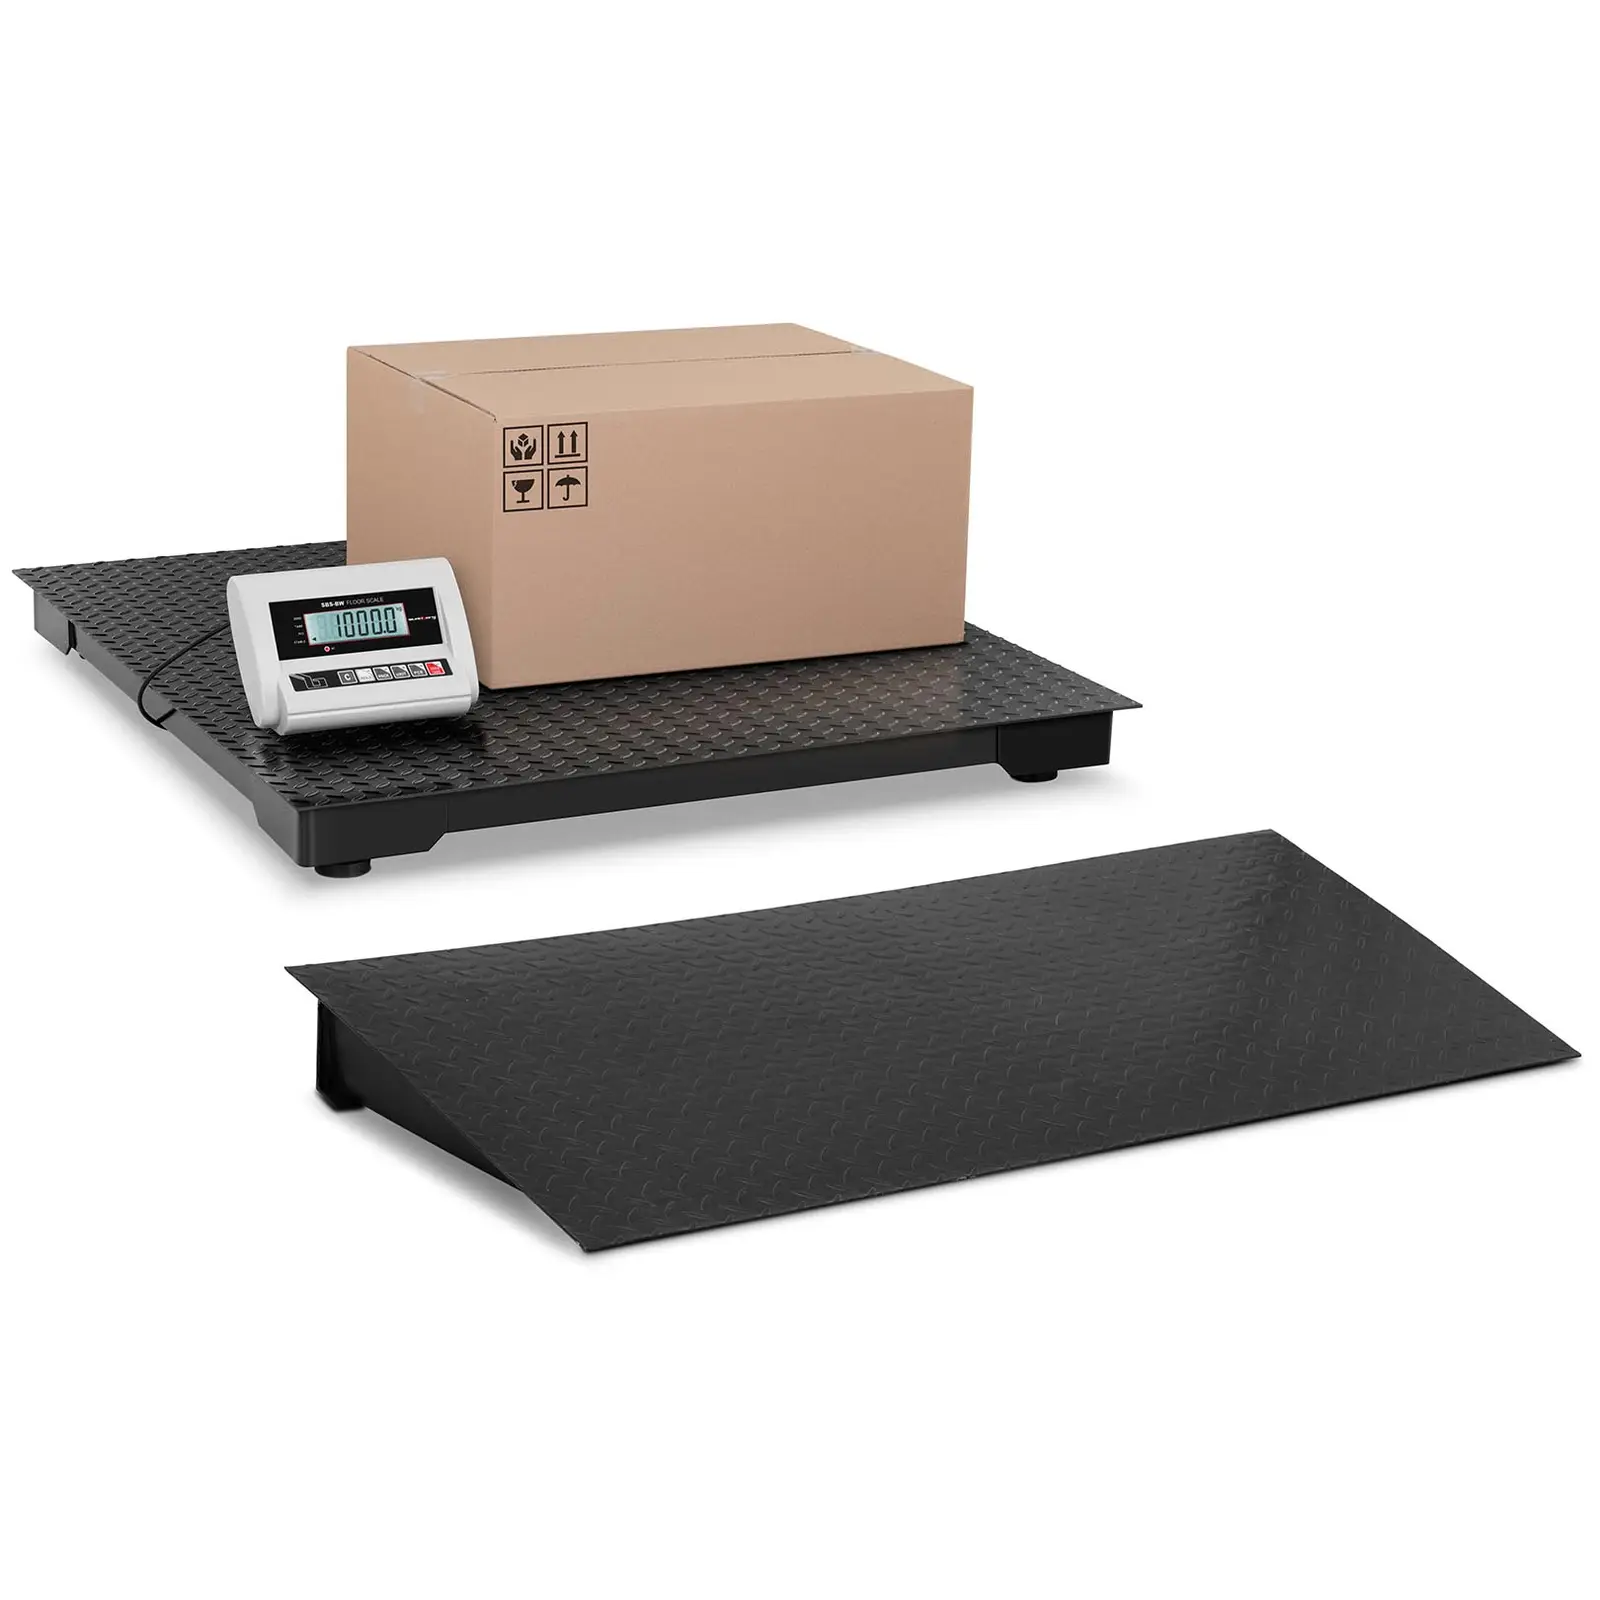 Podlahová váha s rampou - súprava - 1 000 kg/0,5 kg - LCD - batéria 10 h 